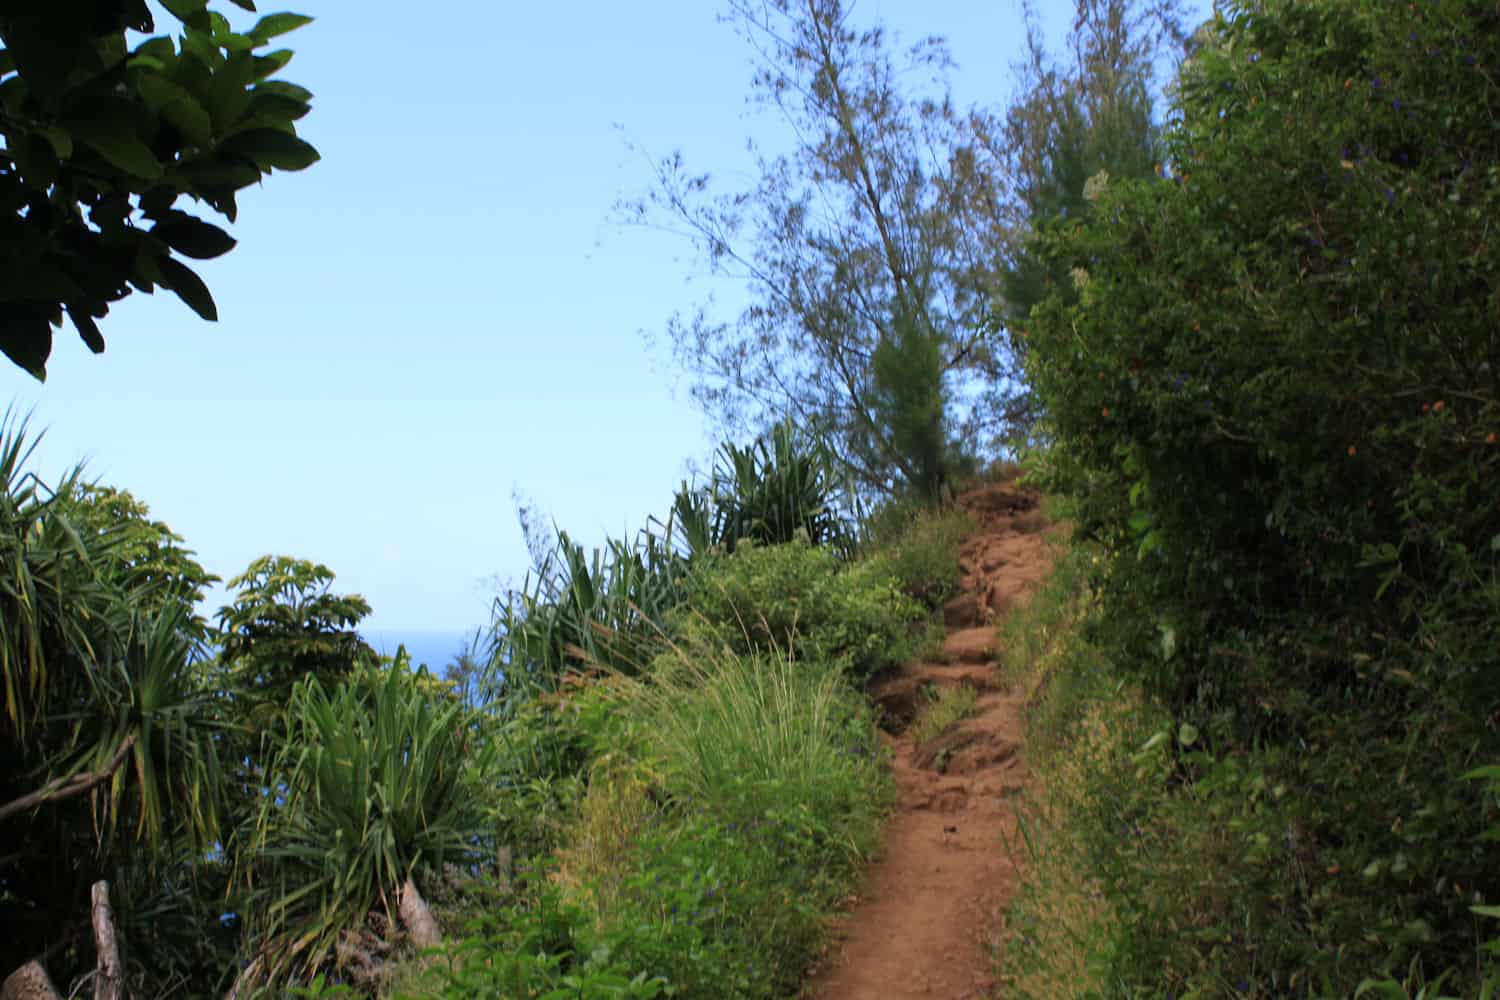 Hanakapiai Trail